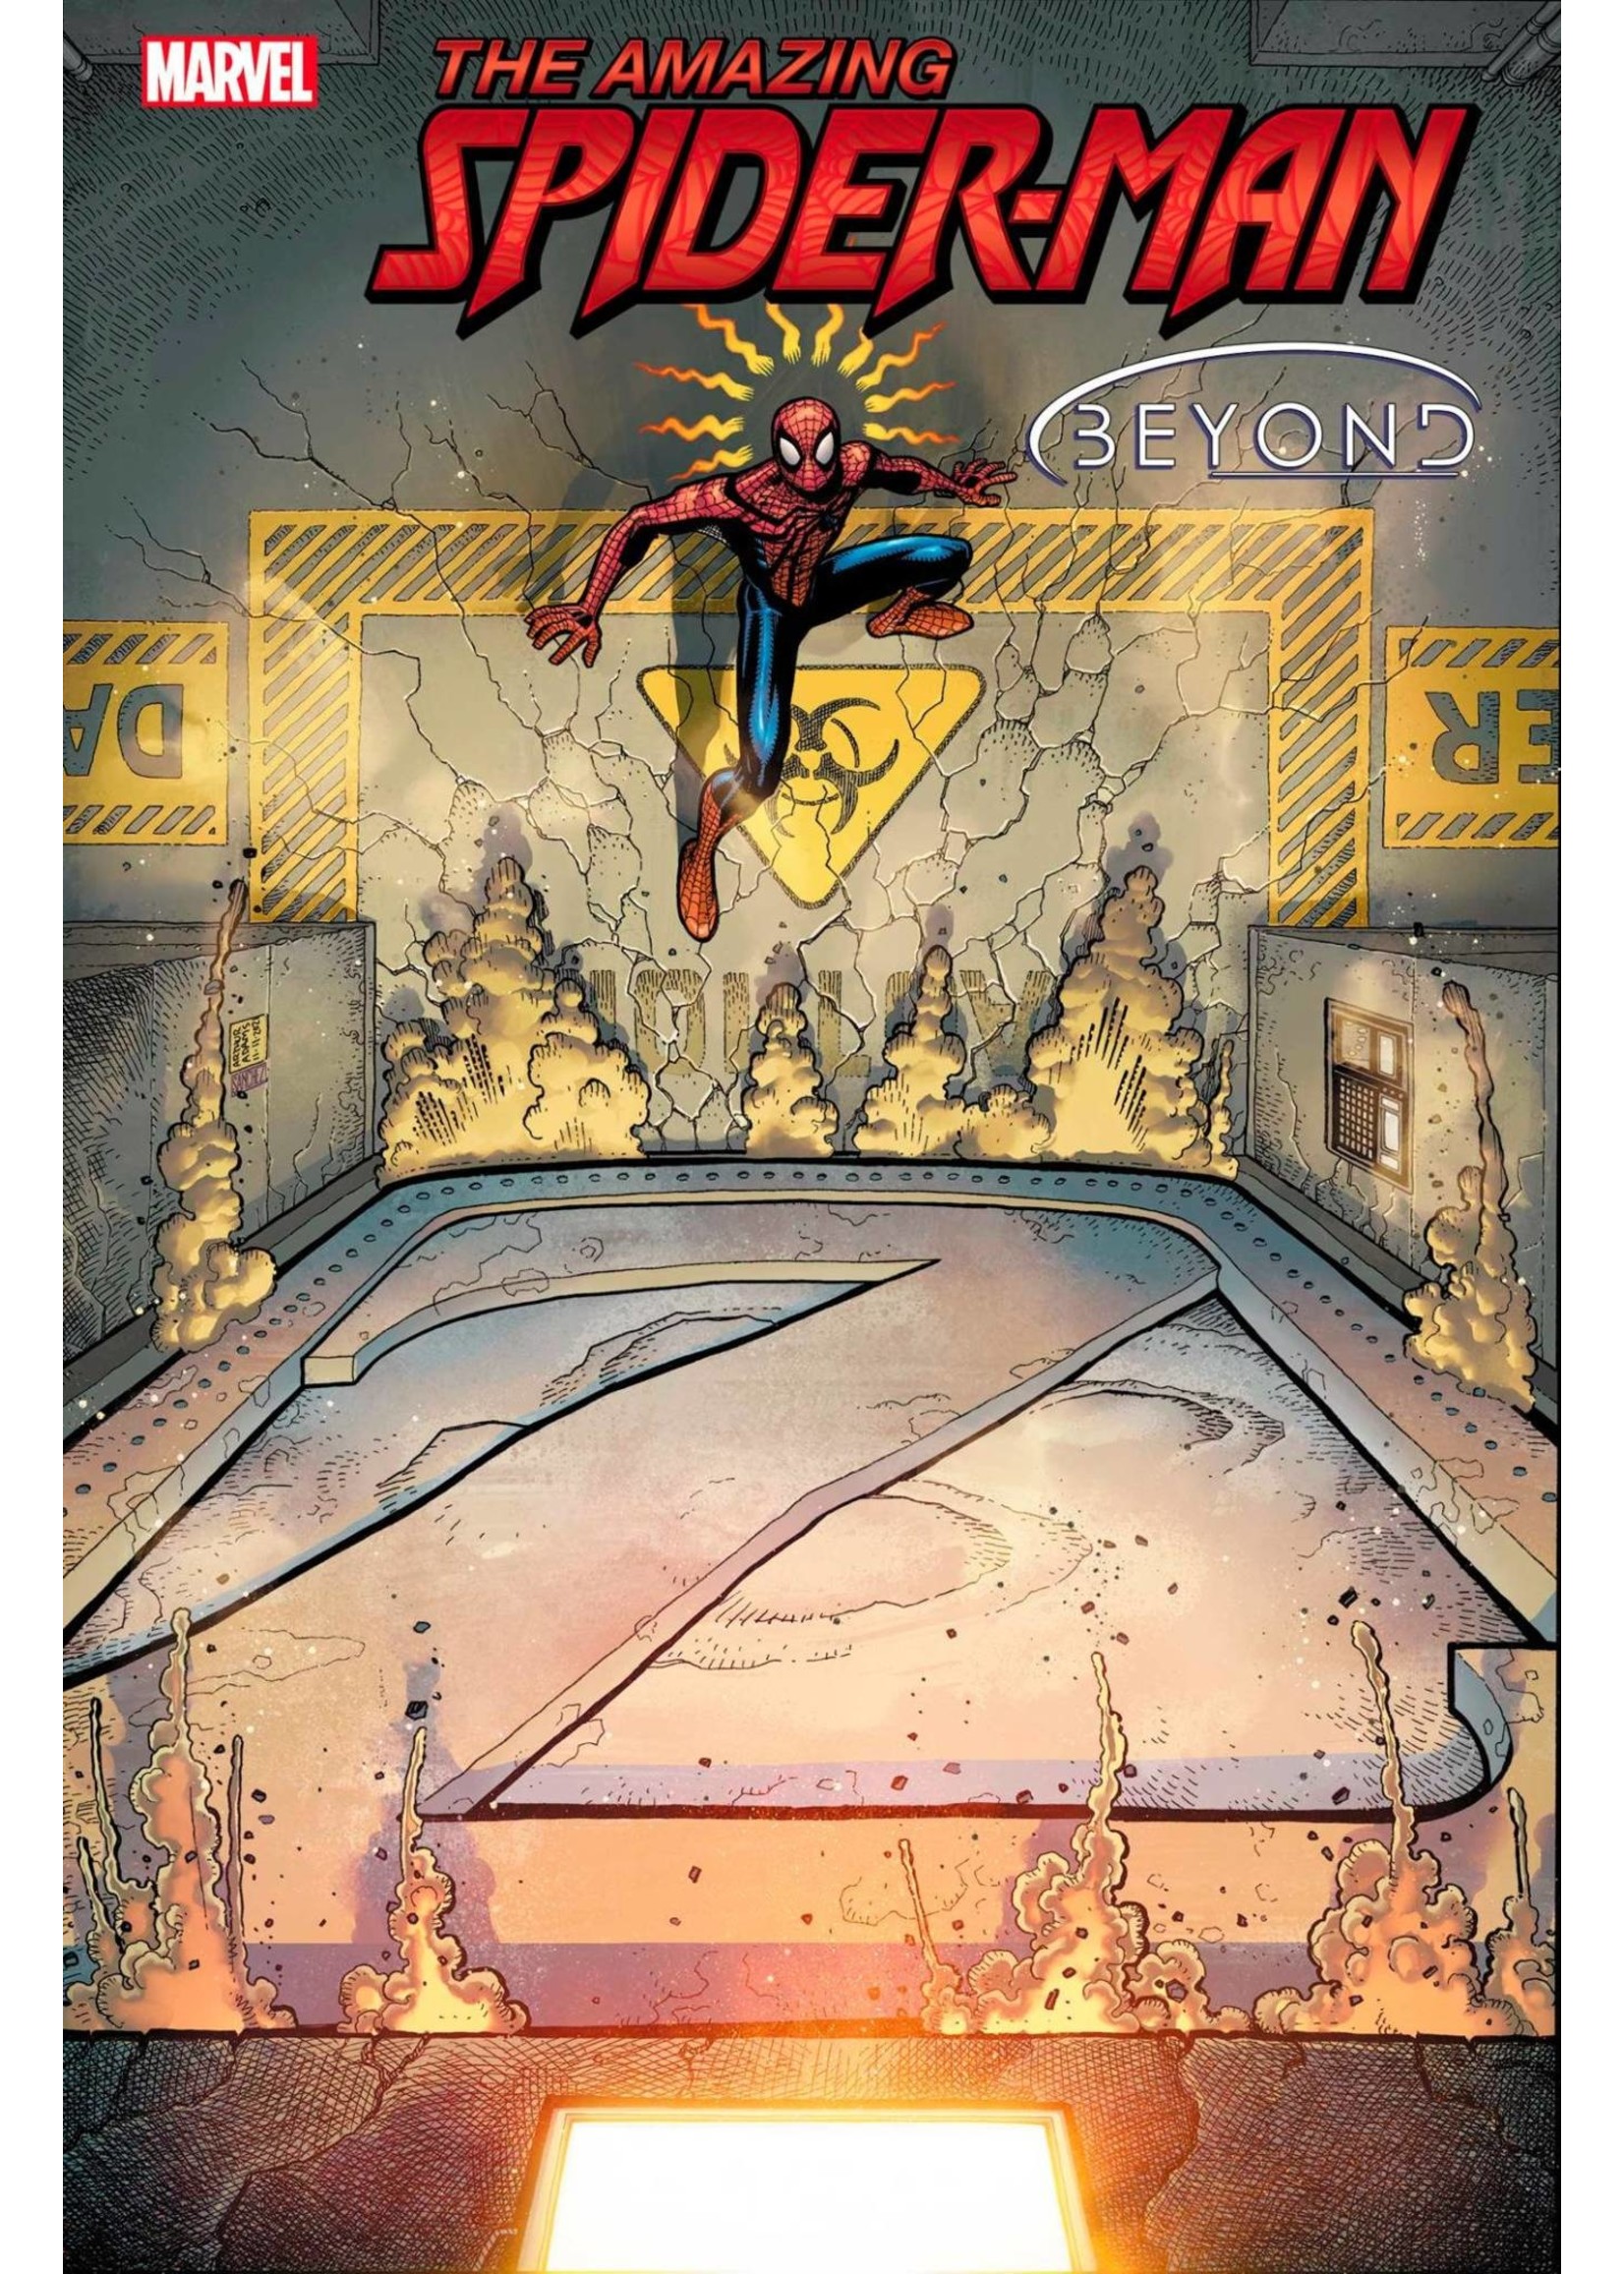 MARVEL COMICS AMAZING SPIDER-MAN #91